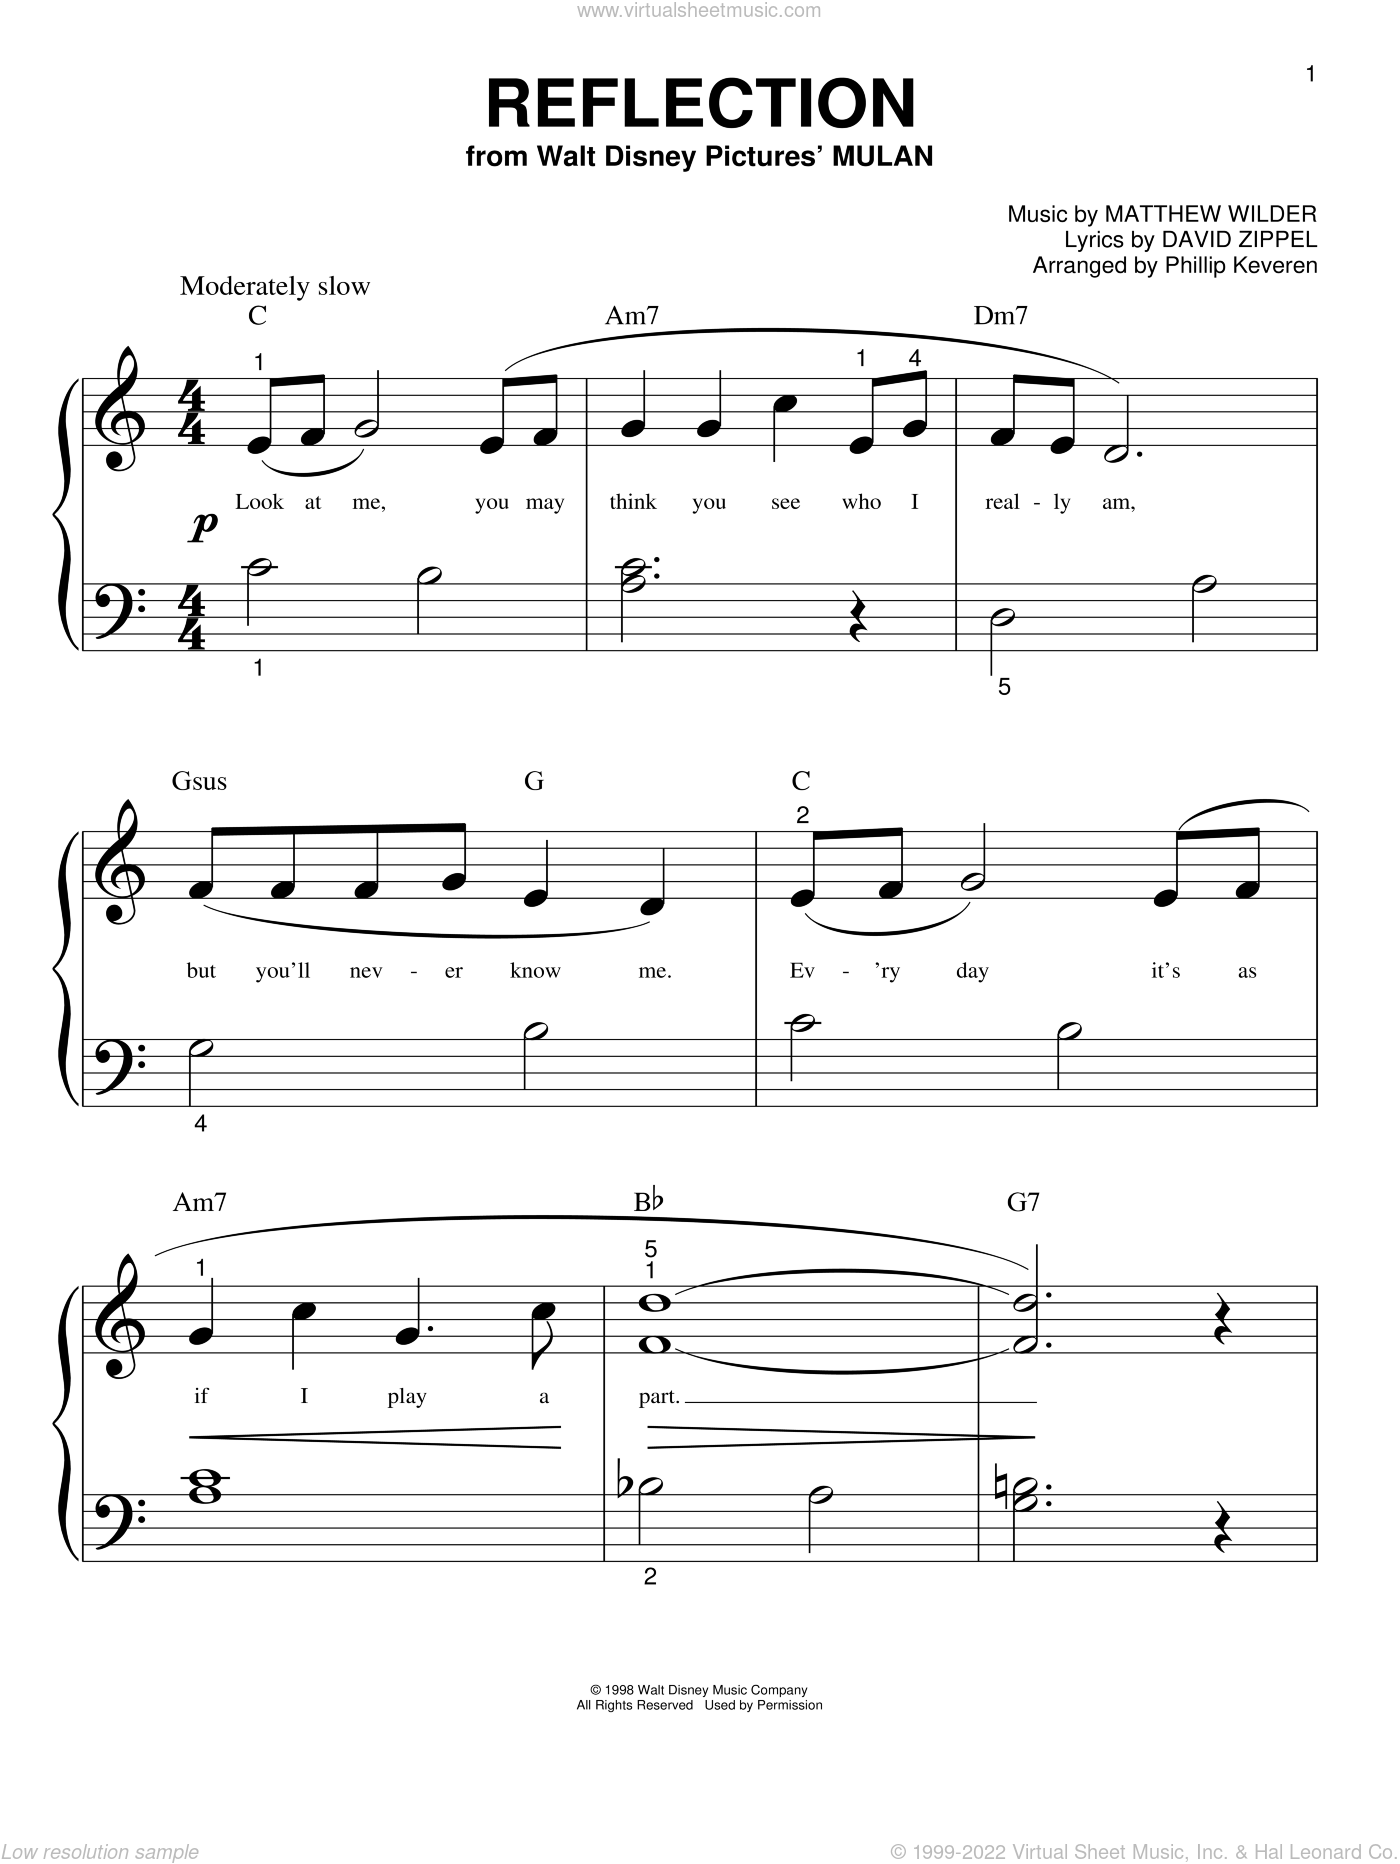 Zippel - Reflection (from Mulan) sheet music for piano ...